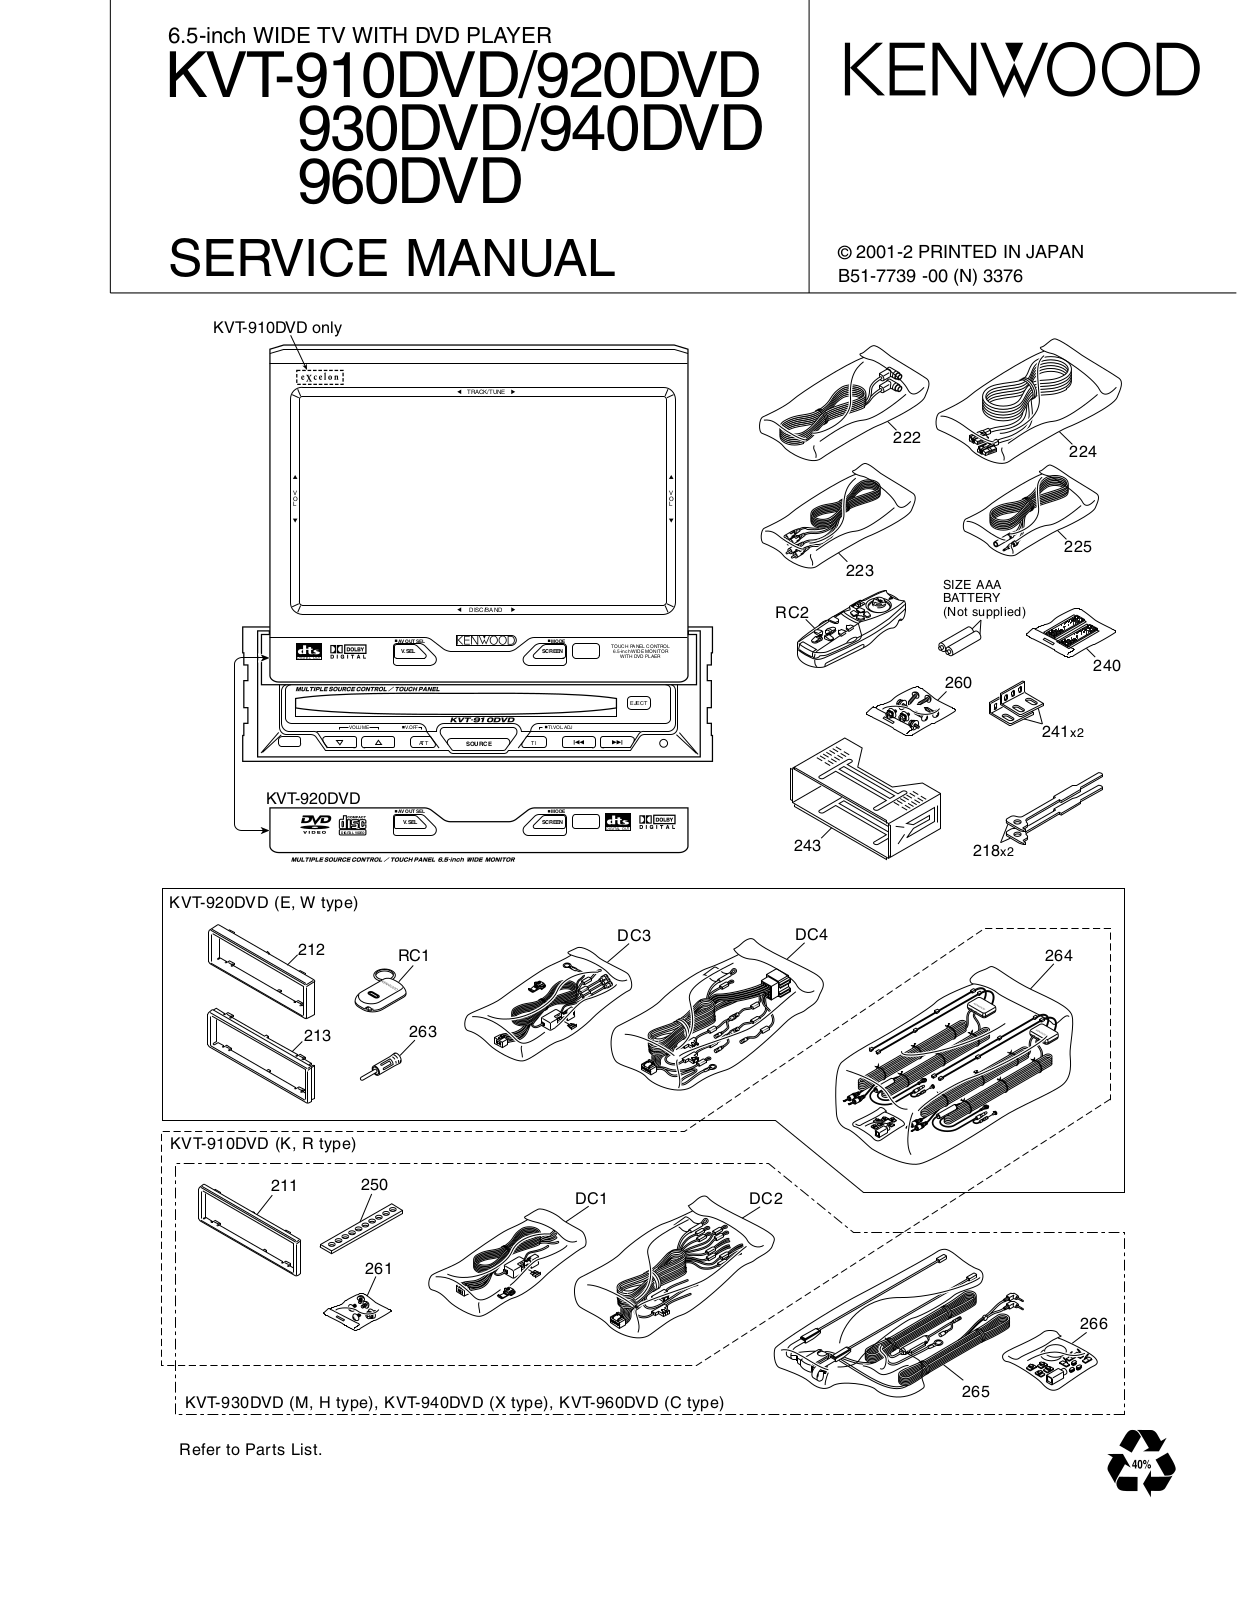 KENWOOD KVT-910DVD, KVT-920DVD, KVT-930DVD, KVT-940DVD, KVT-960DVD Service Manual